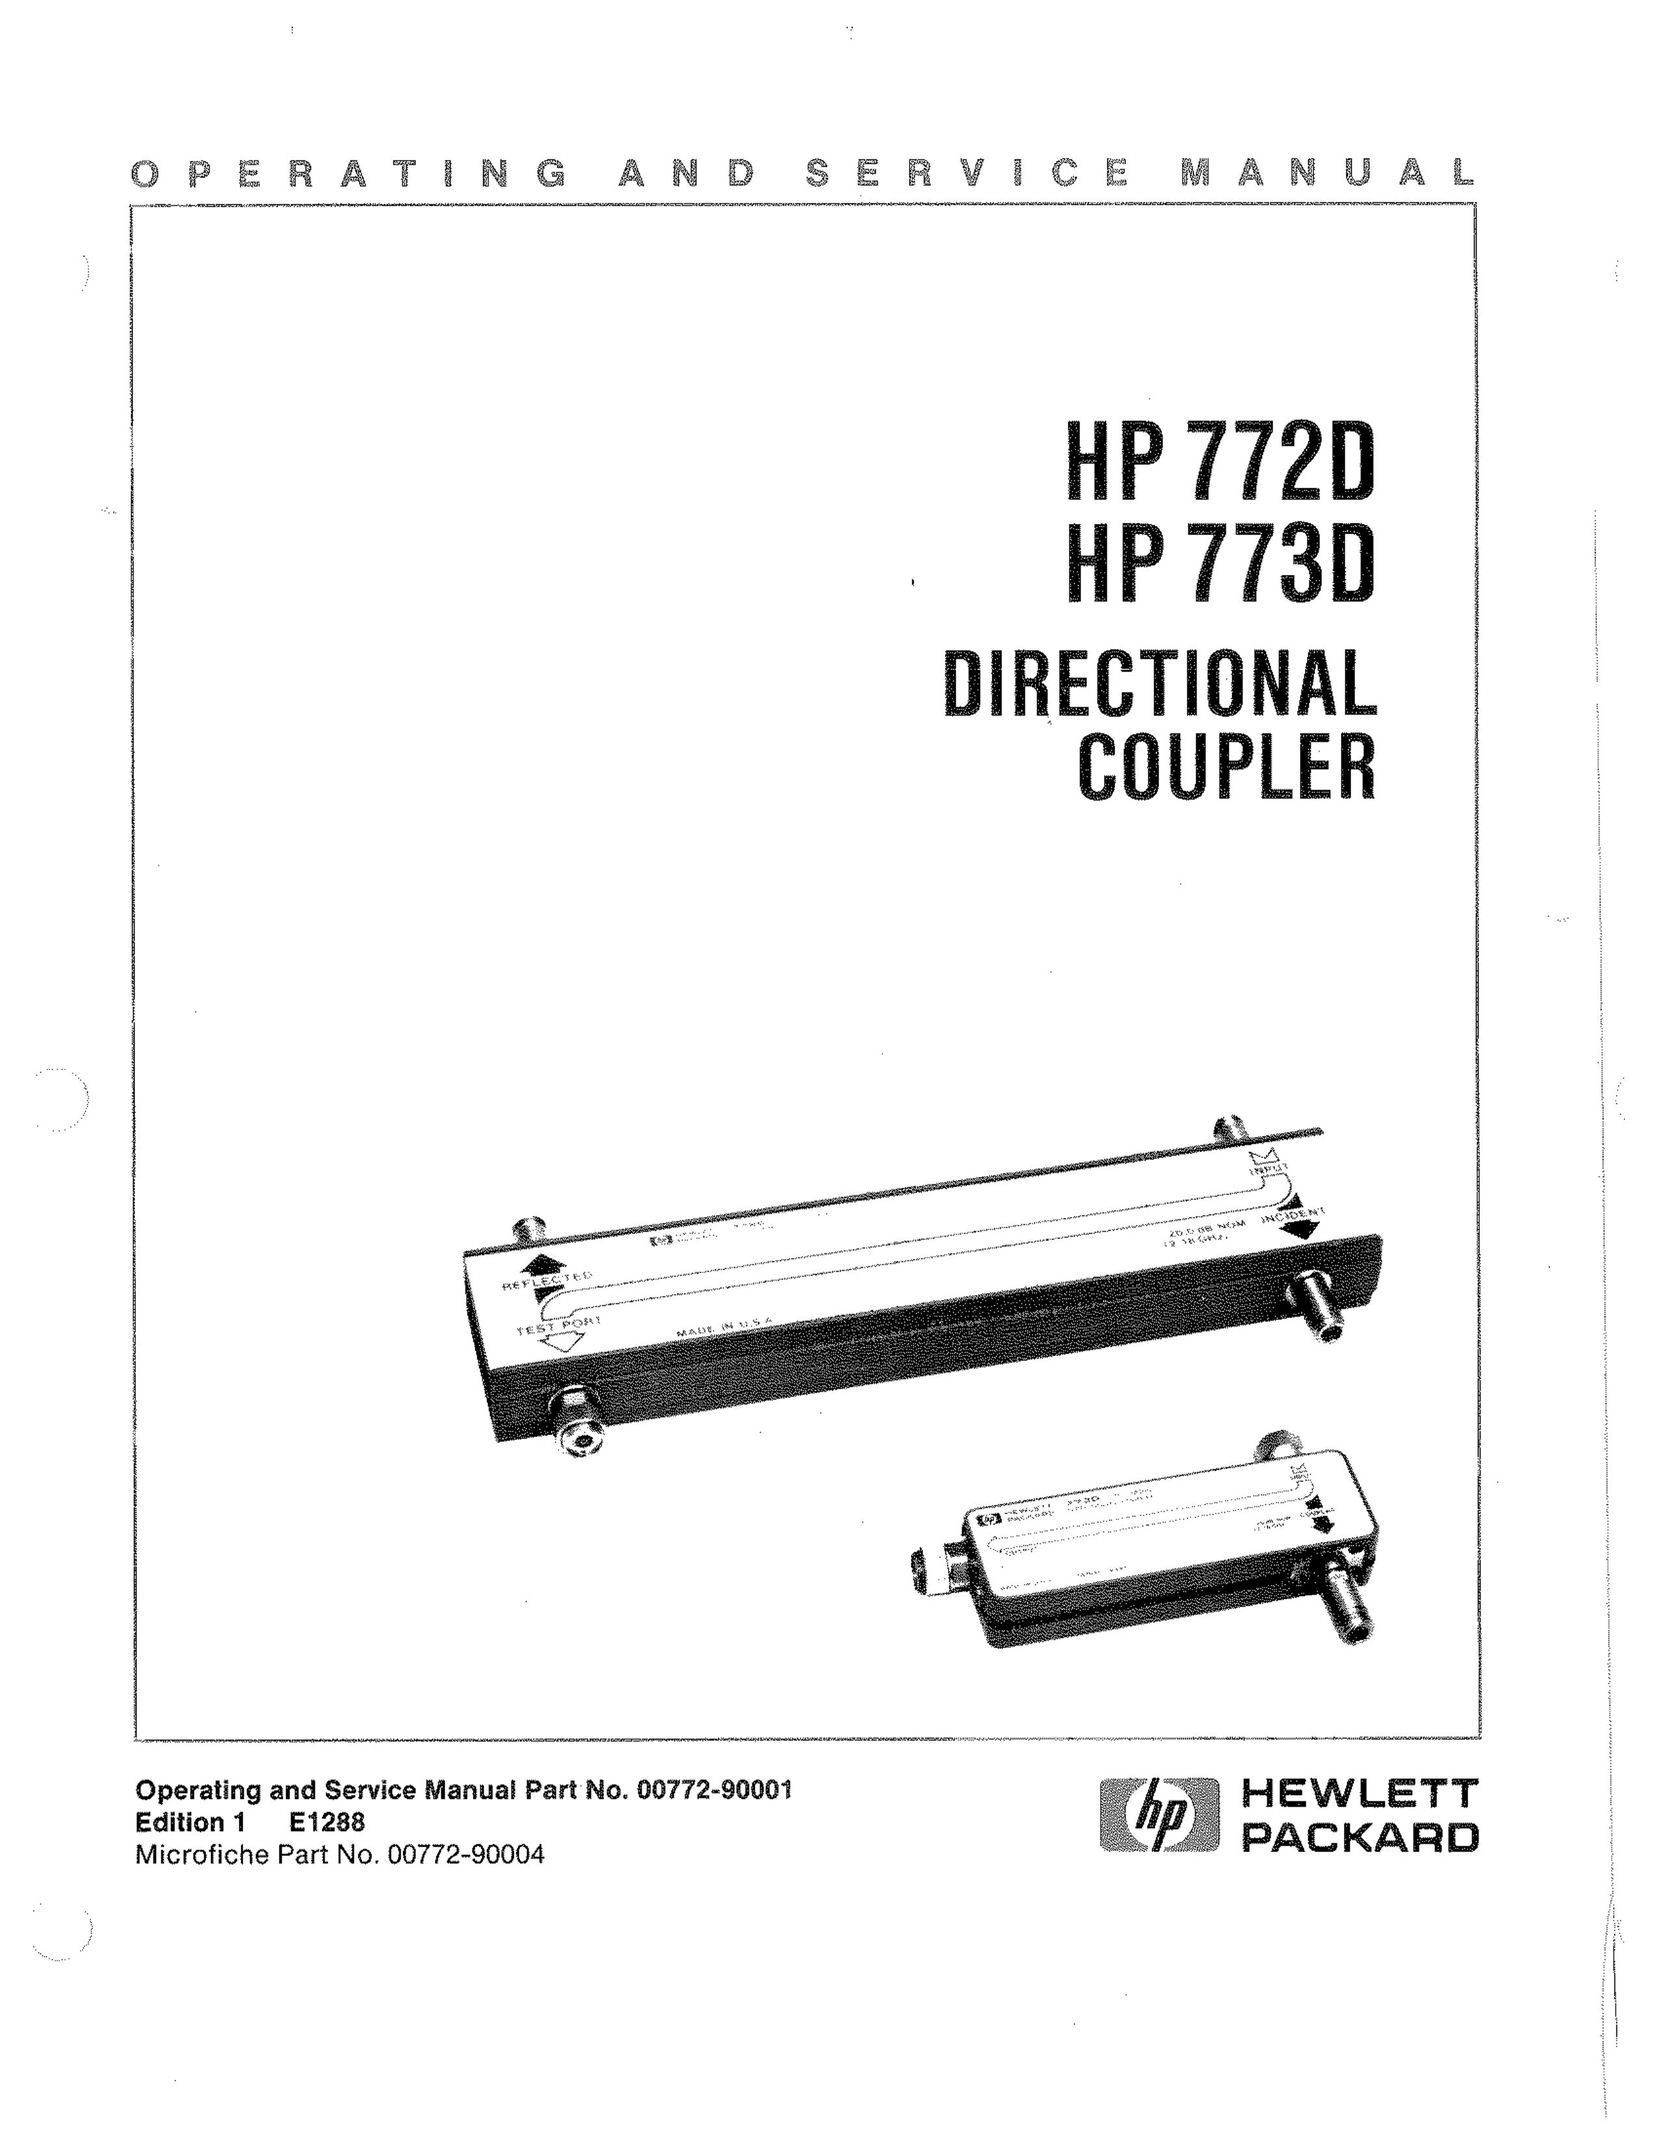 HP (Hewlett-Packard) hp 773d and hp 773d Telephone Accessories User Manual